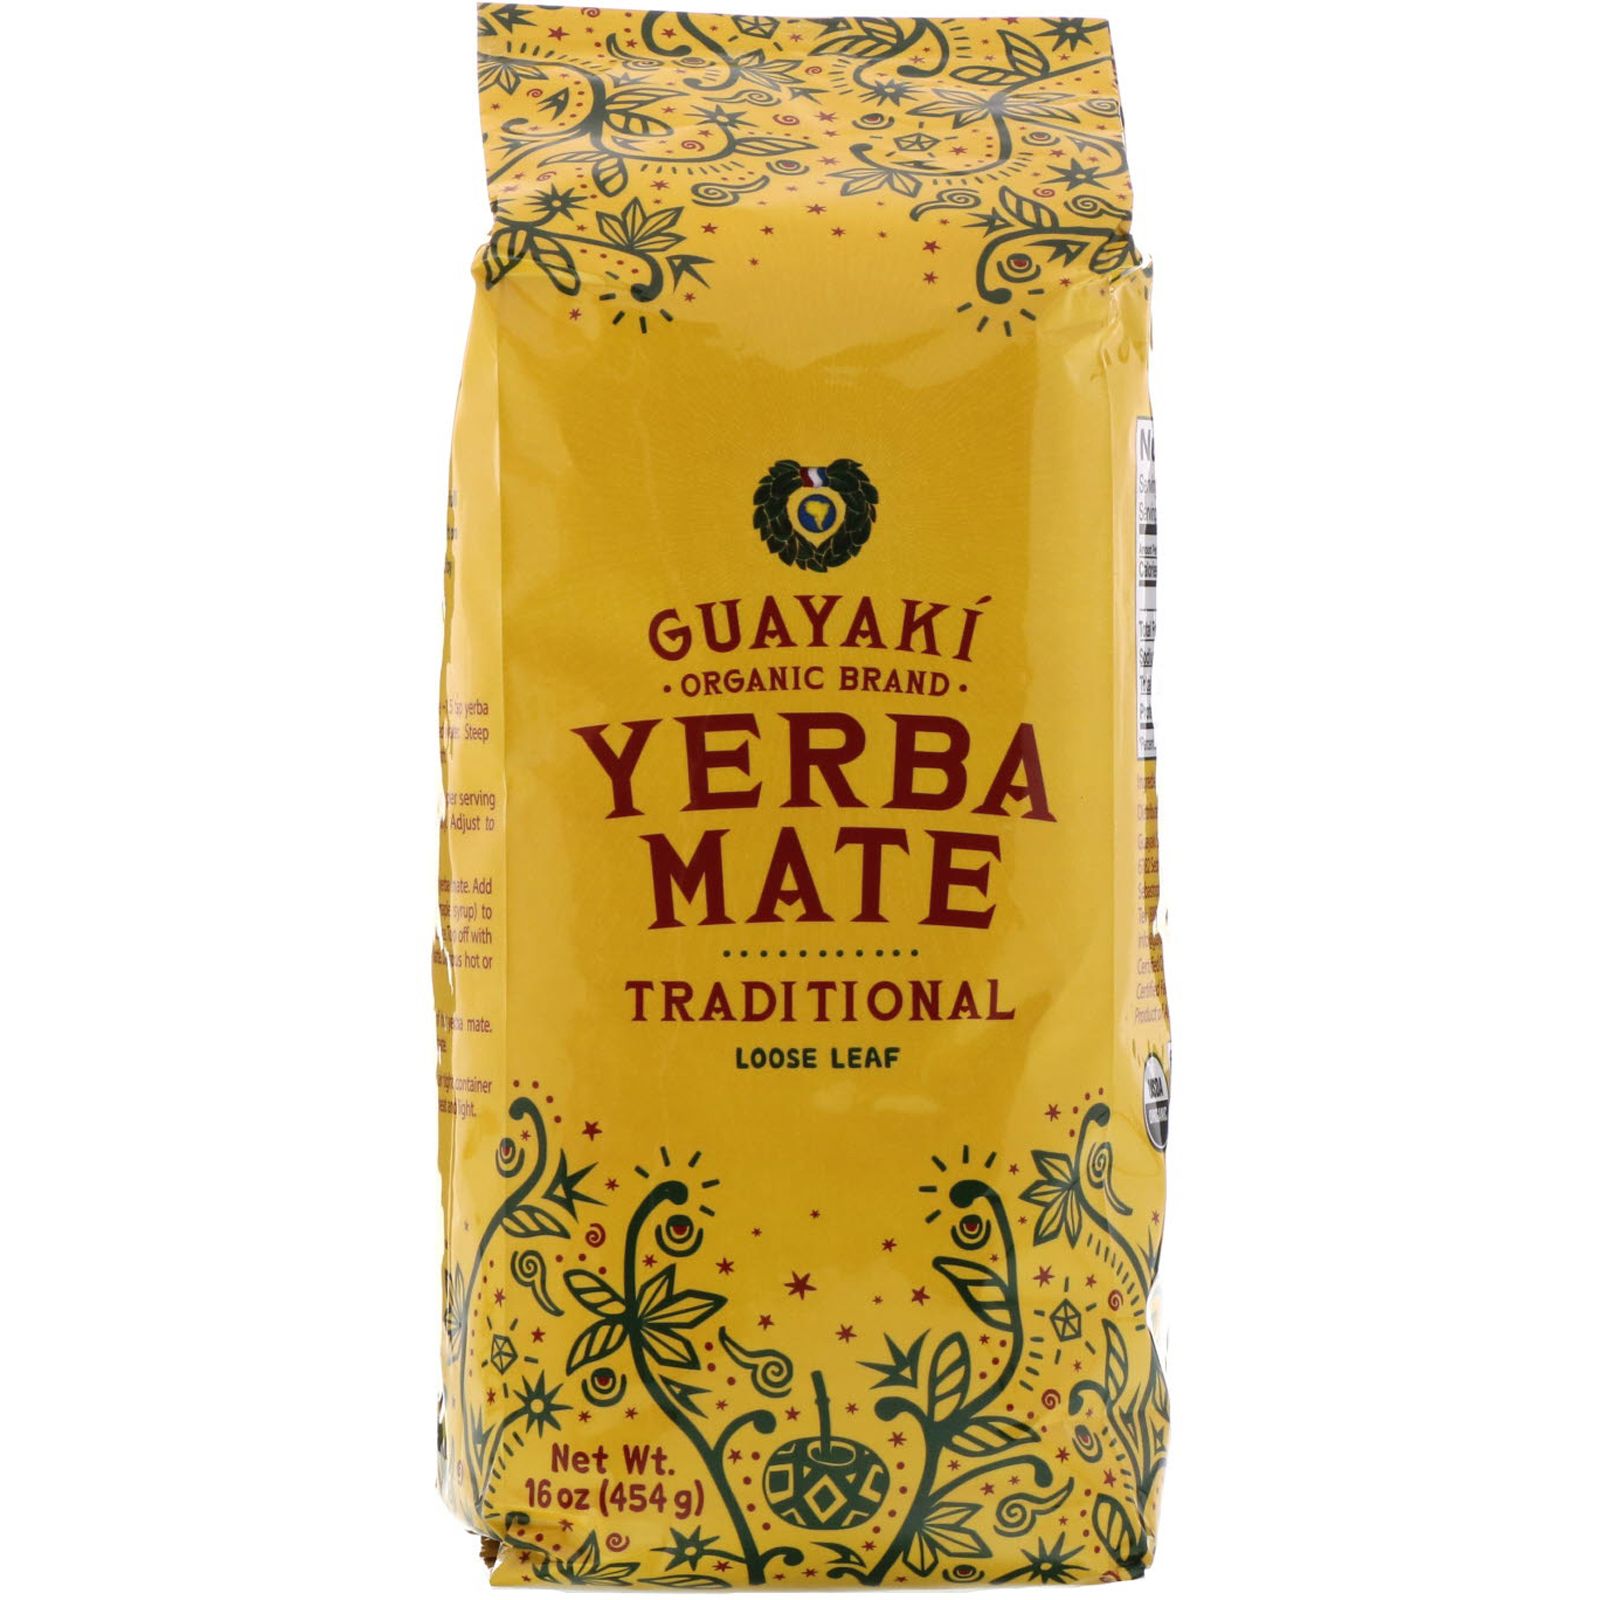 Айс мате. Yerba Mate чай. Guayaki Yerba Mate. Organic Yerba Mate Guayaki. Йерба мате листовой.